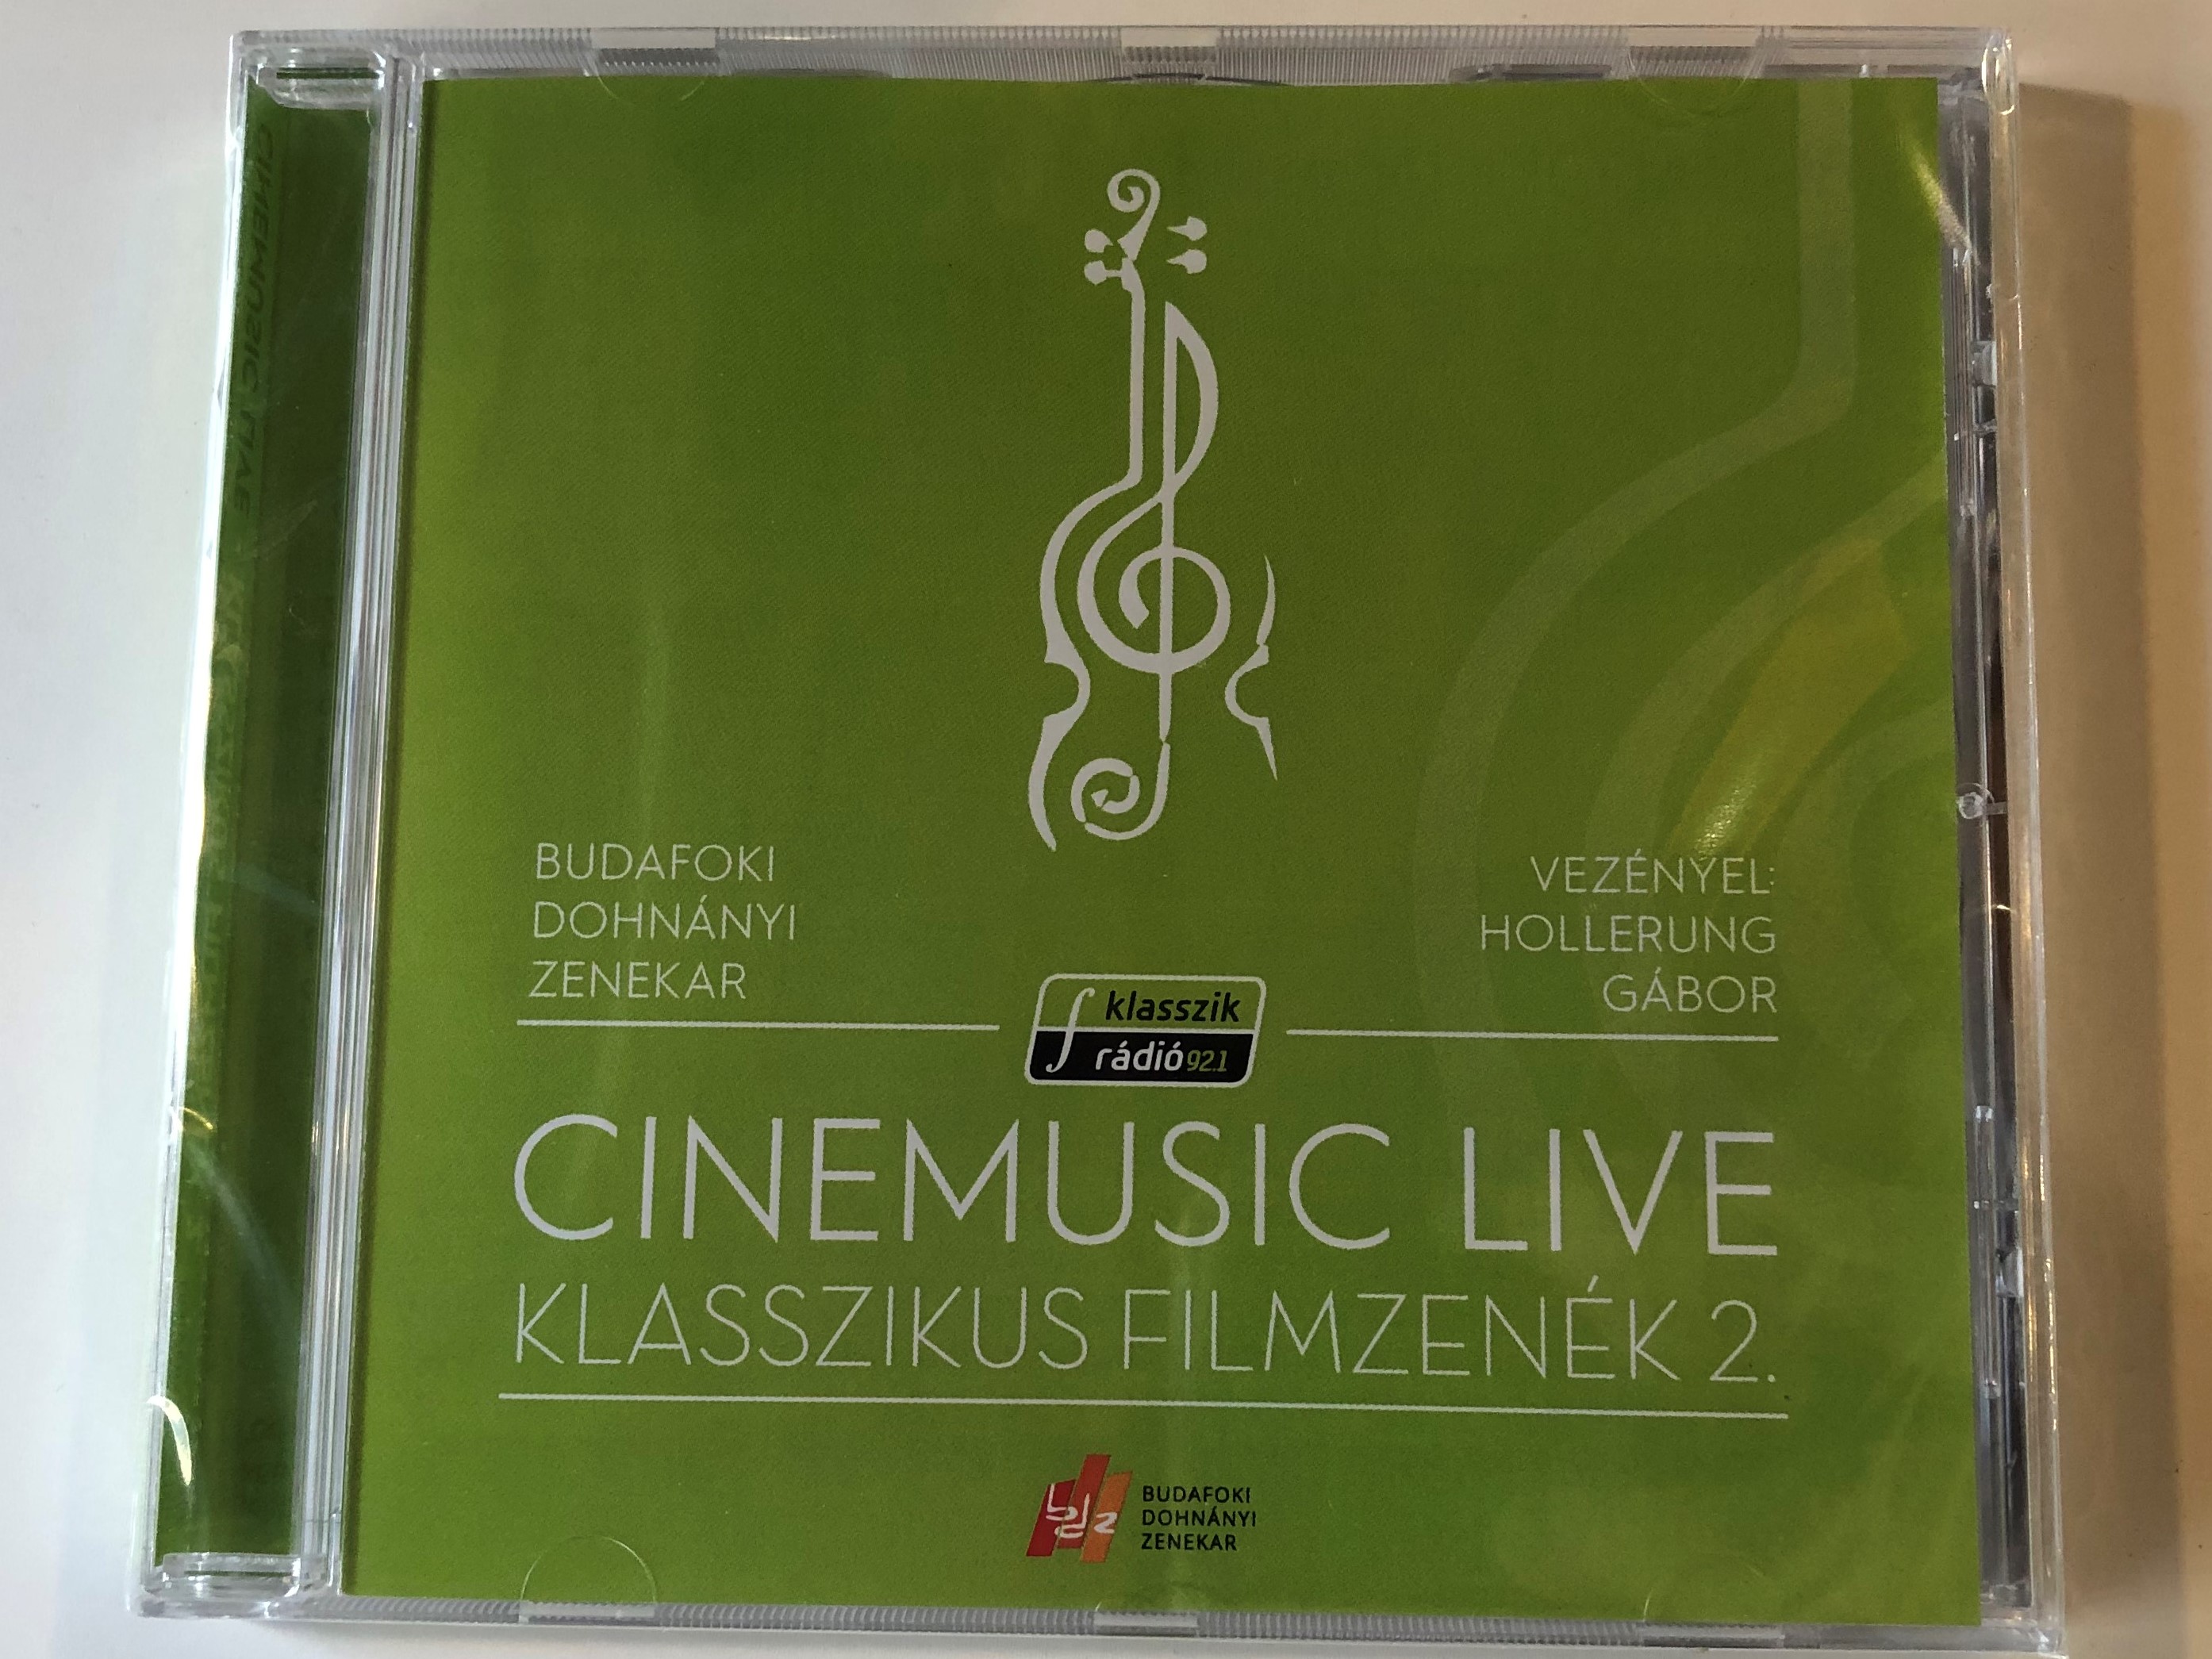 cinemusic-live-klasszikus-filmzenek-2.-budafoki-dohnanyi-zenekar-vezenyel-hollerung-gabor-universal-music-kft.-audio-cd-2019-7726946-1-.jpg